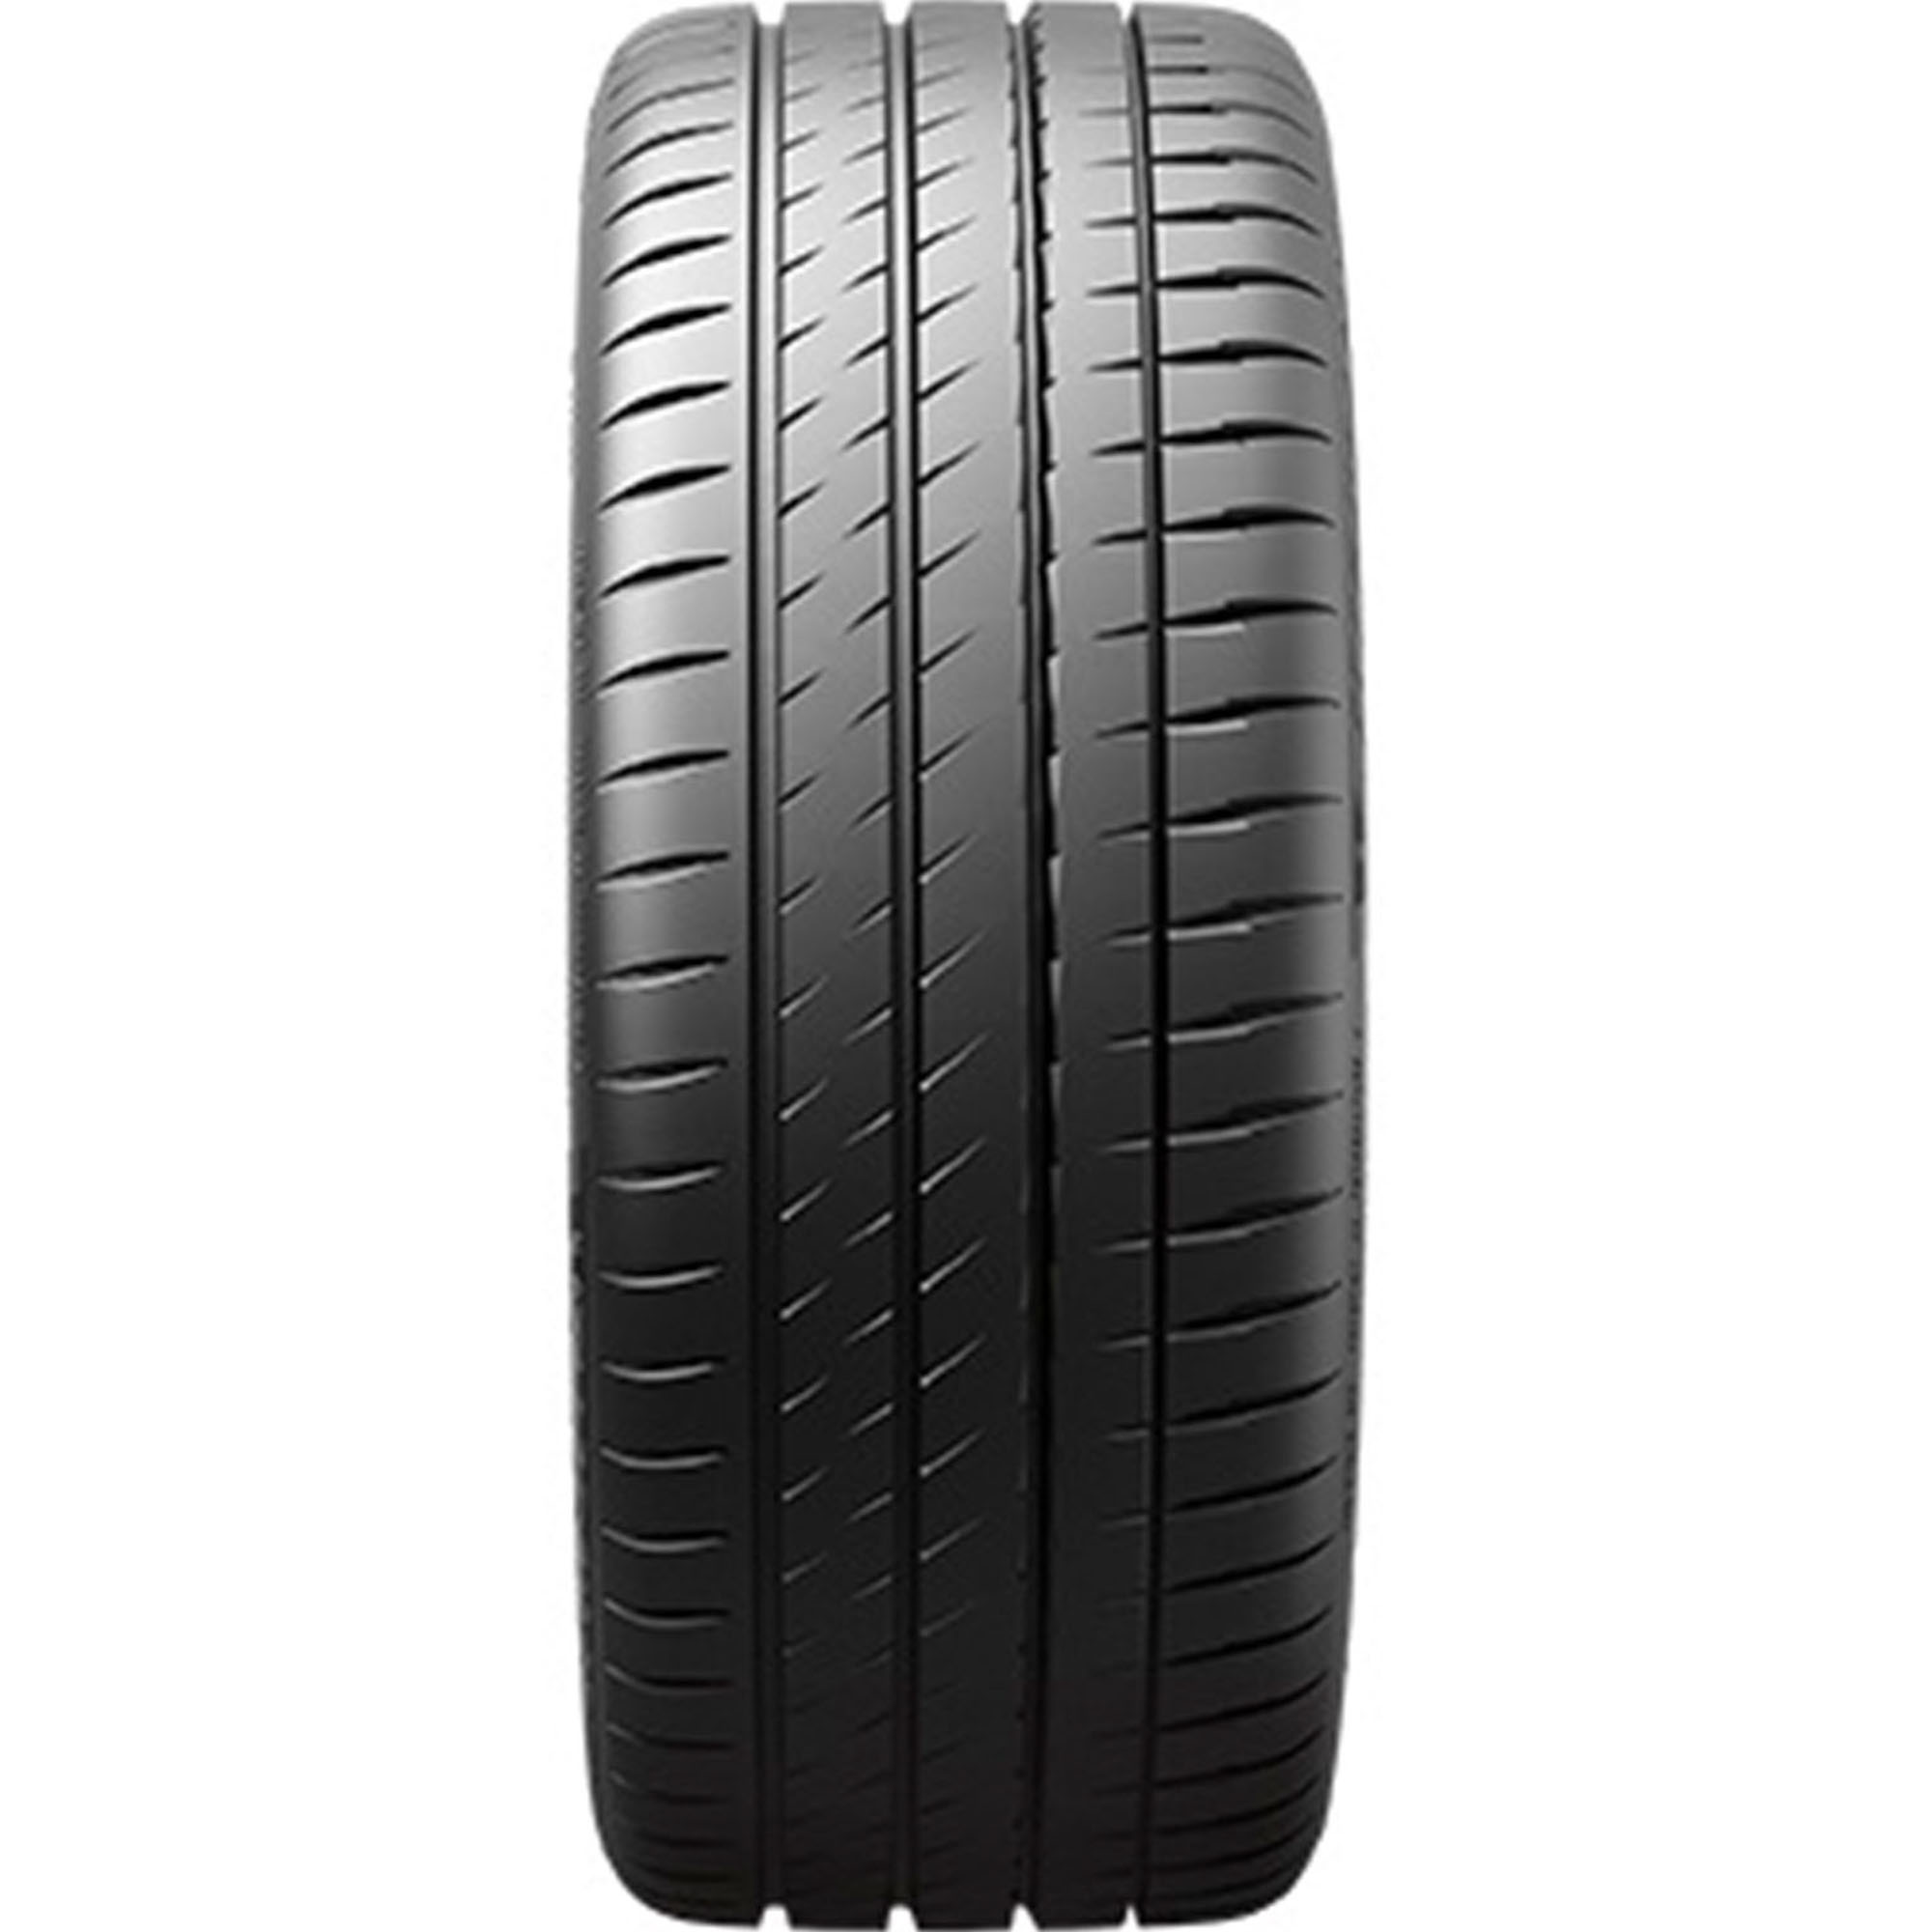 Michelin Pilot Sport 4S Performance 245/45ZR18 (100Y) XL Passenger Tire - image 3 of 4